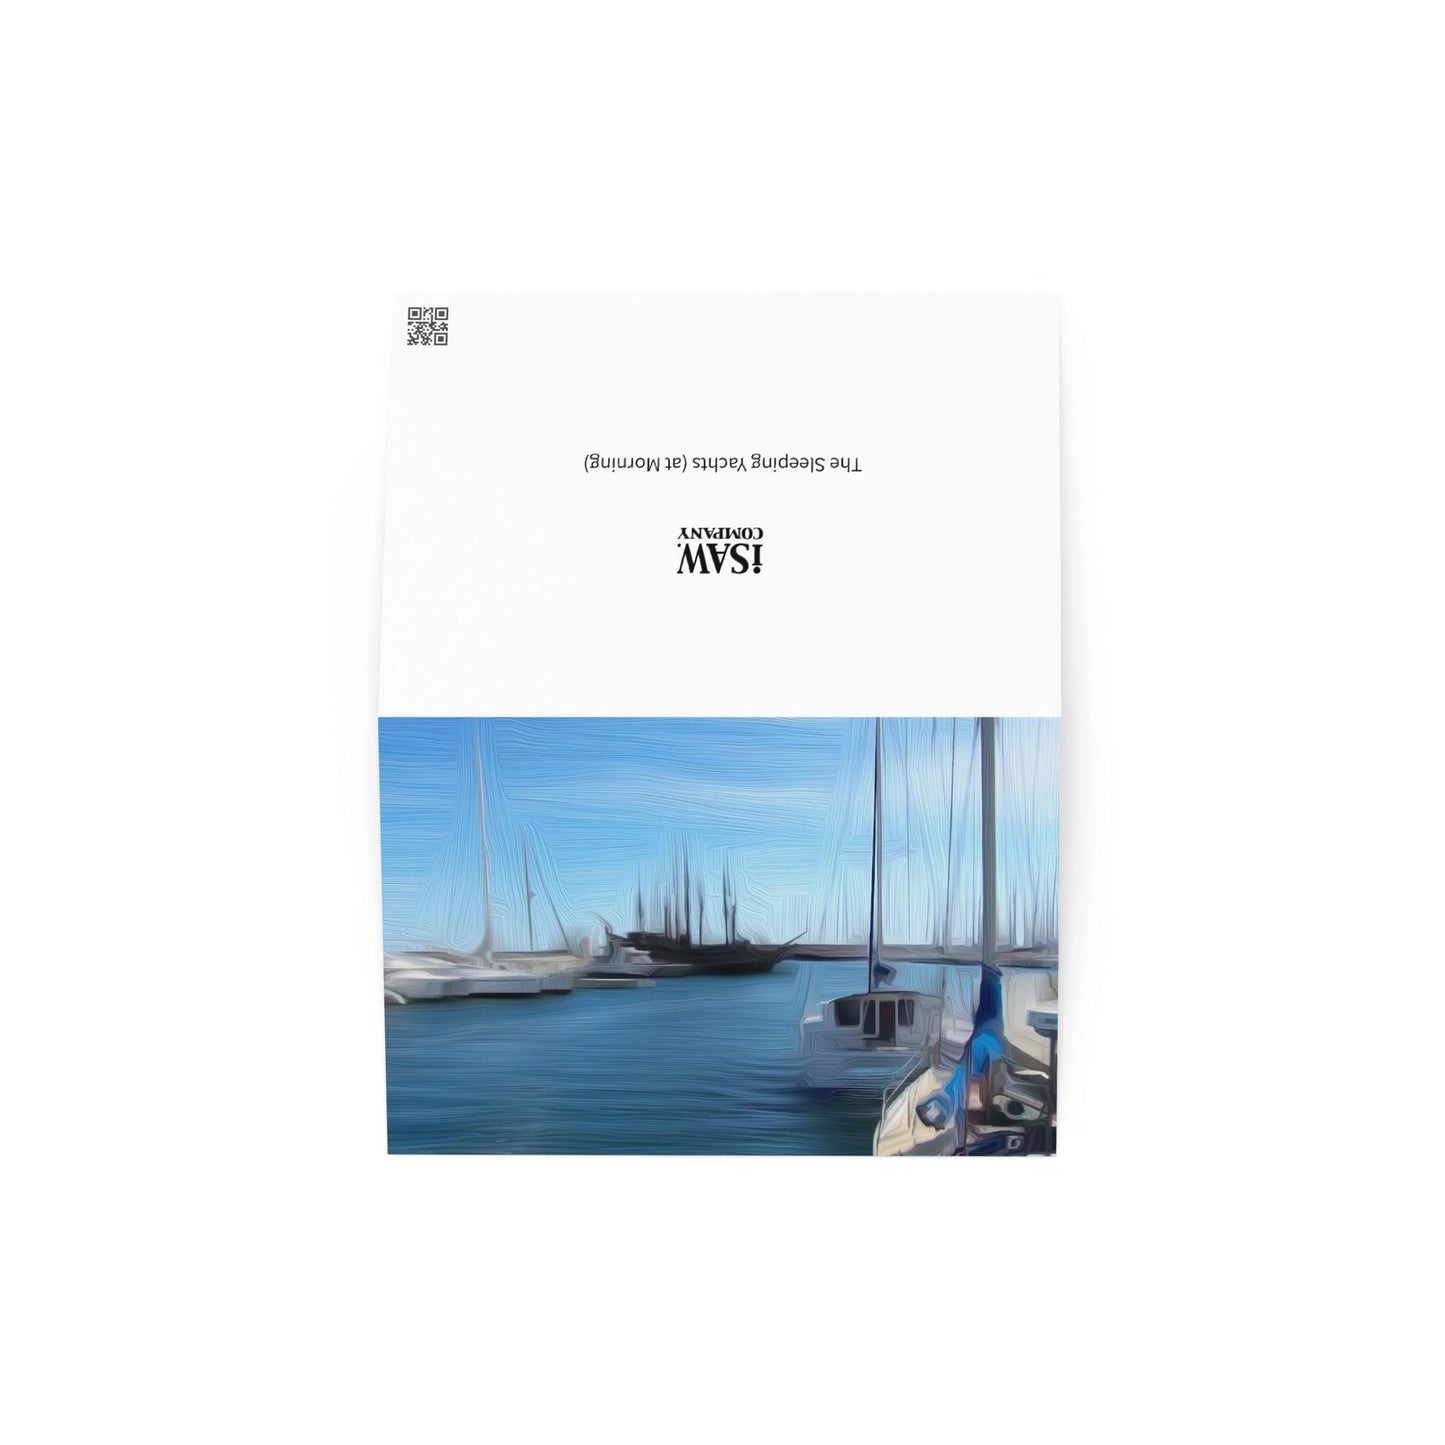 The Sleeping Yachts (at Morning) - Note Card - iSAW Company